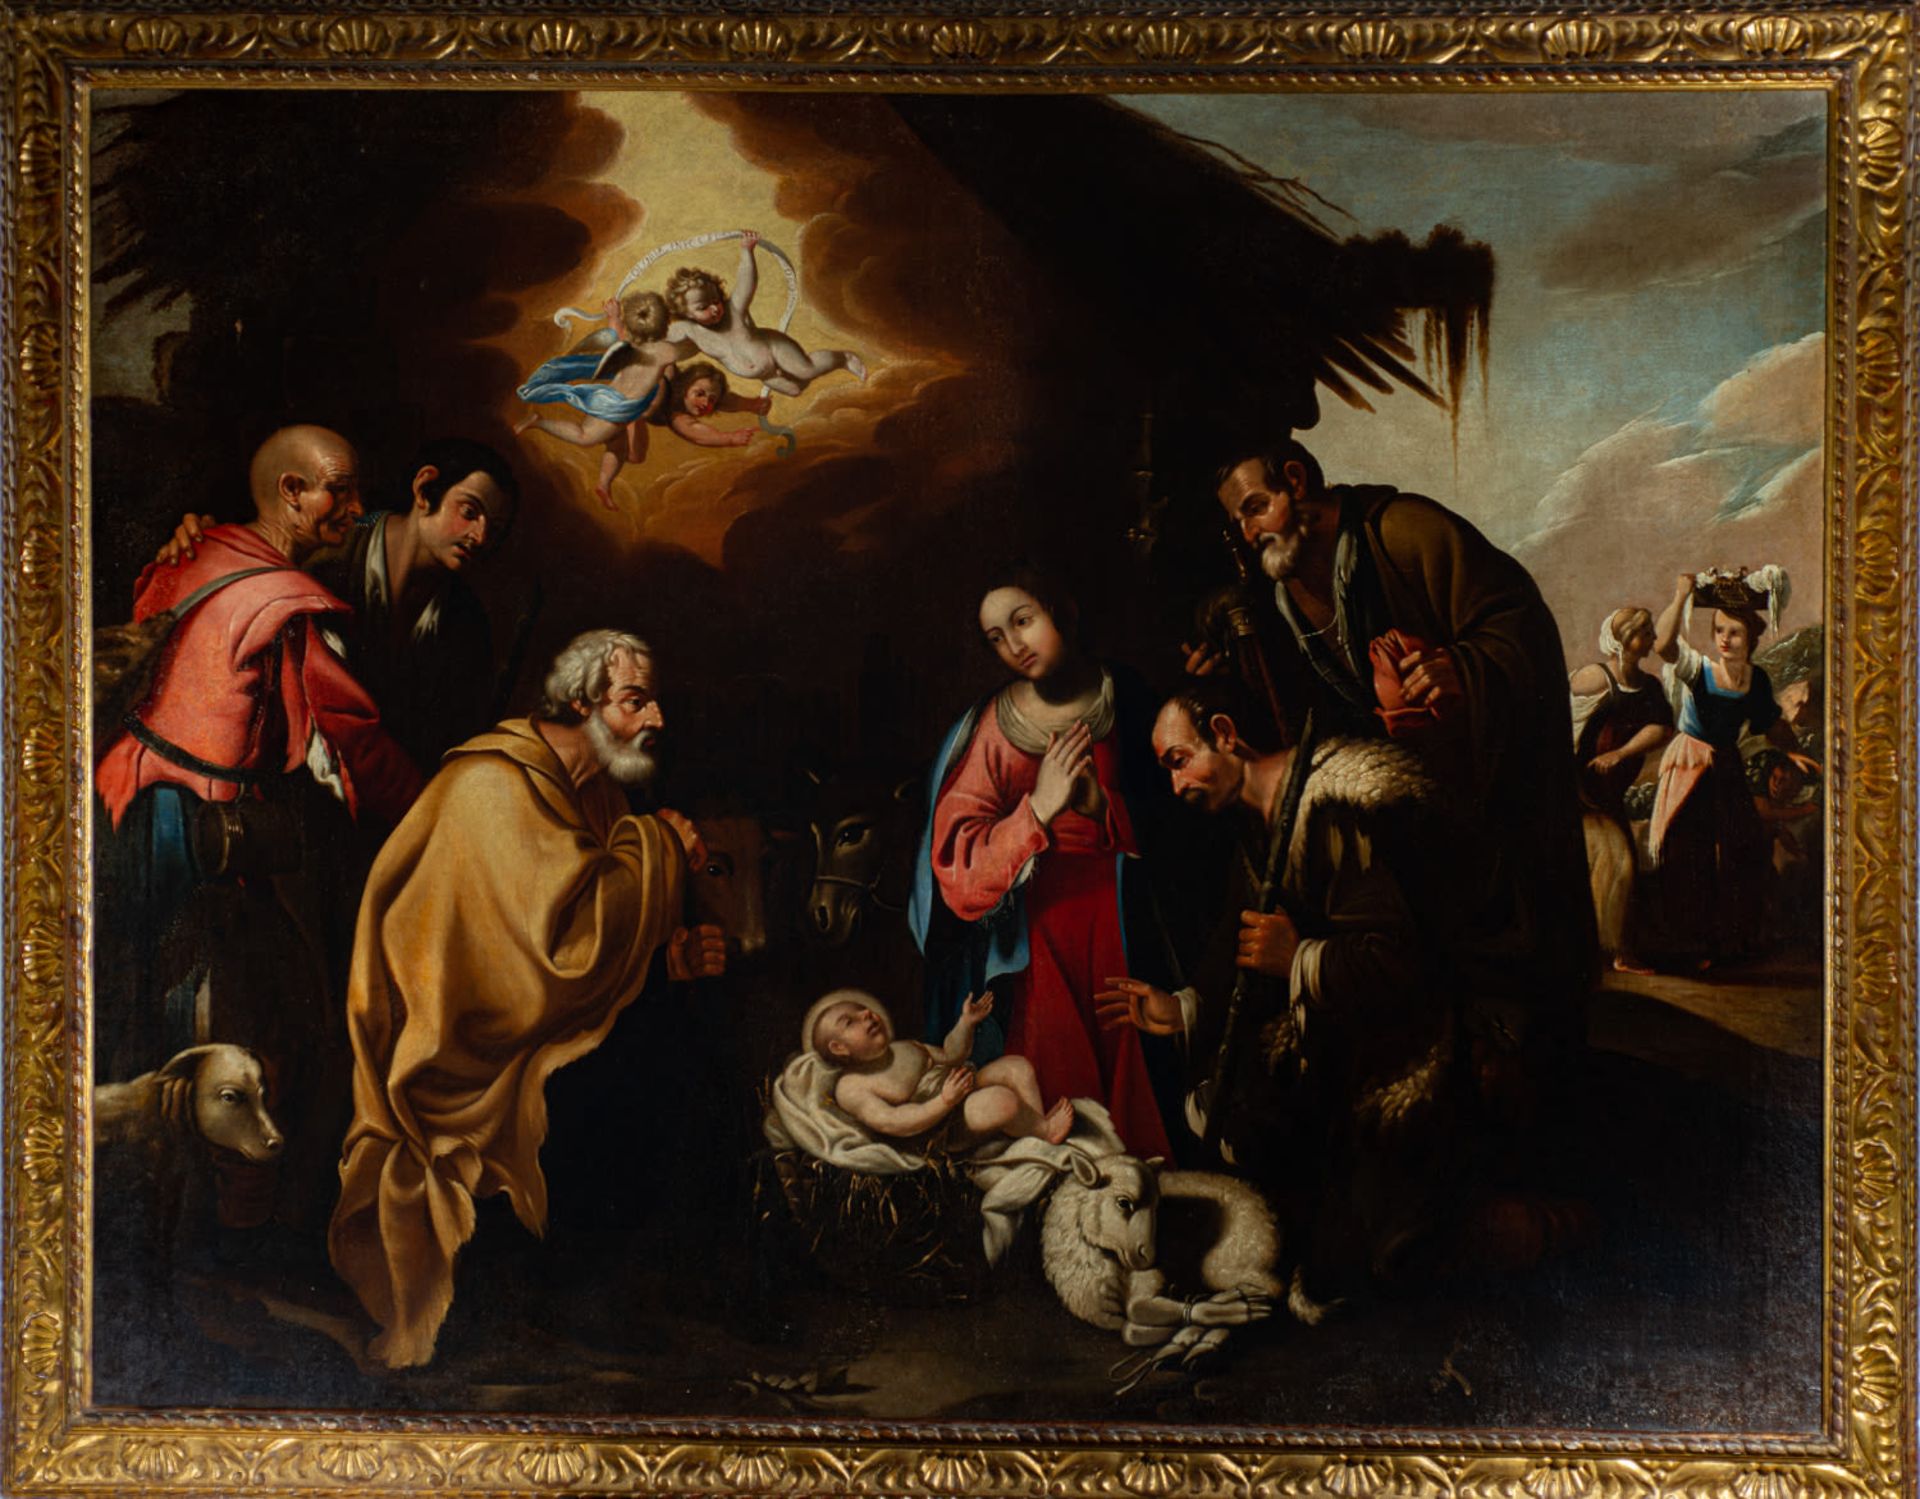 "The Adoration of the Shepherds", attributed to Antonio del Castillo y Saavedra (Córdoba, Spain, 161